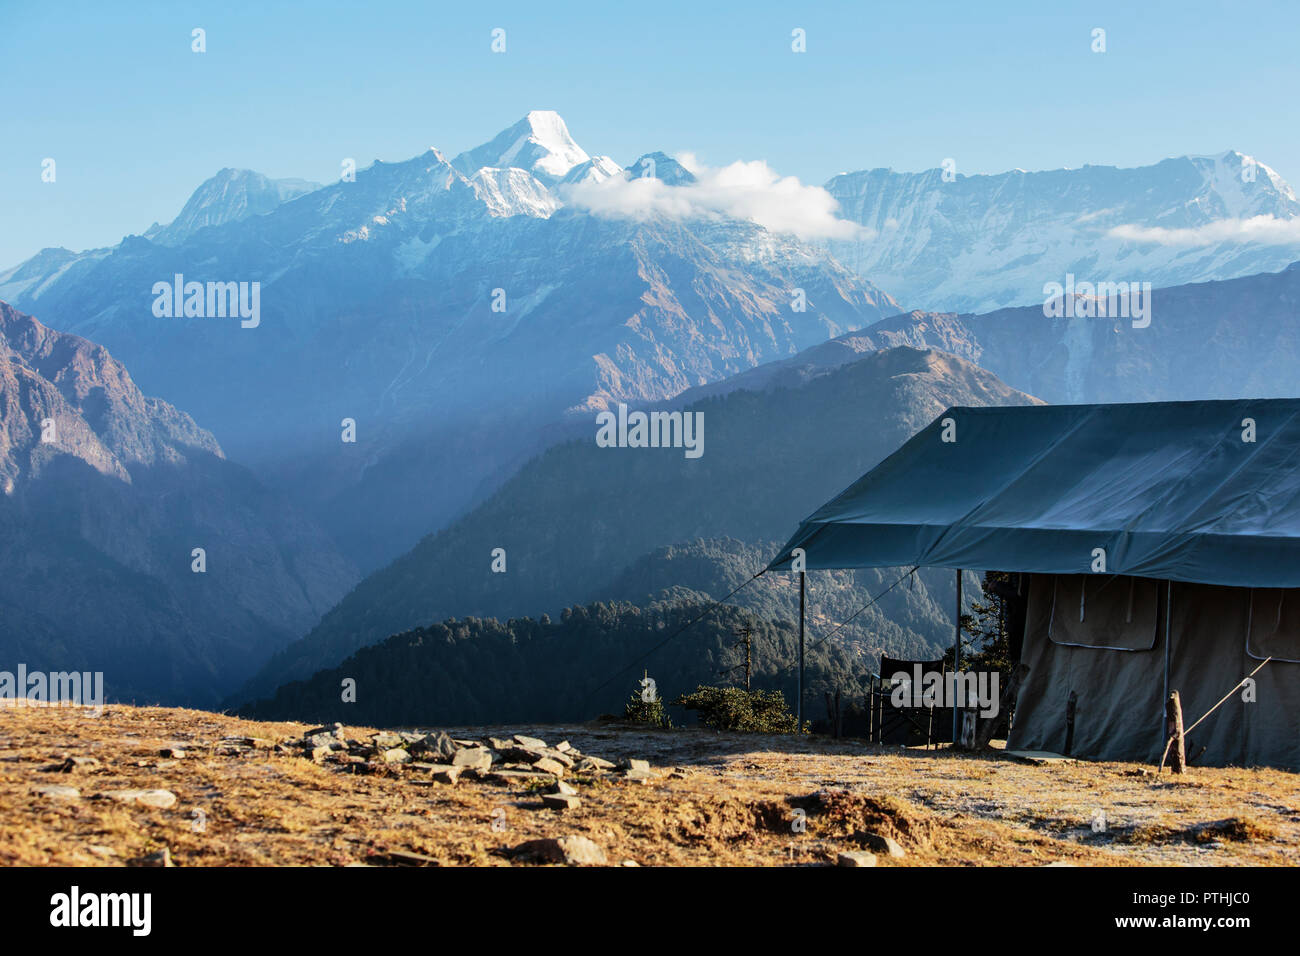 Yurt overlooking majestic mountain range, Jaikuni, Indian Himalayan Foothills Stock Photo